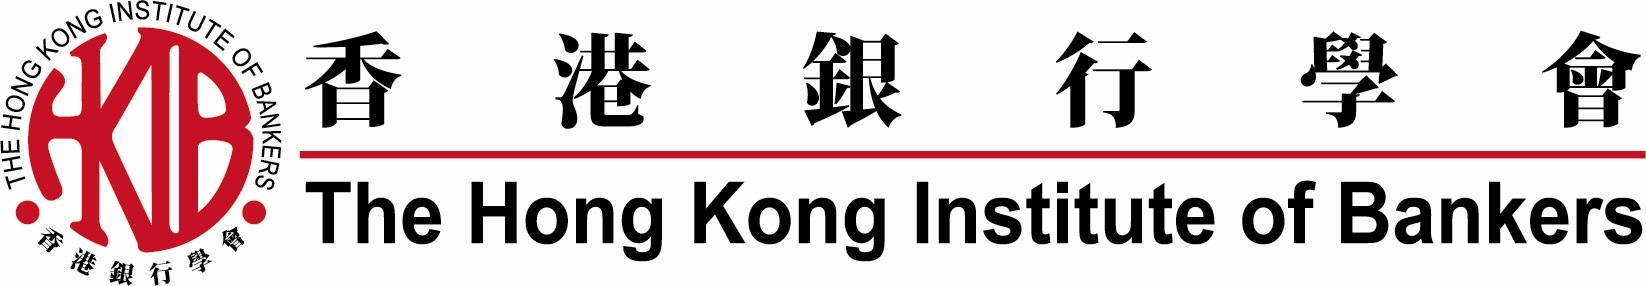 HKIB Logo (full)